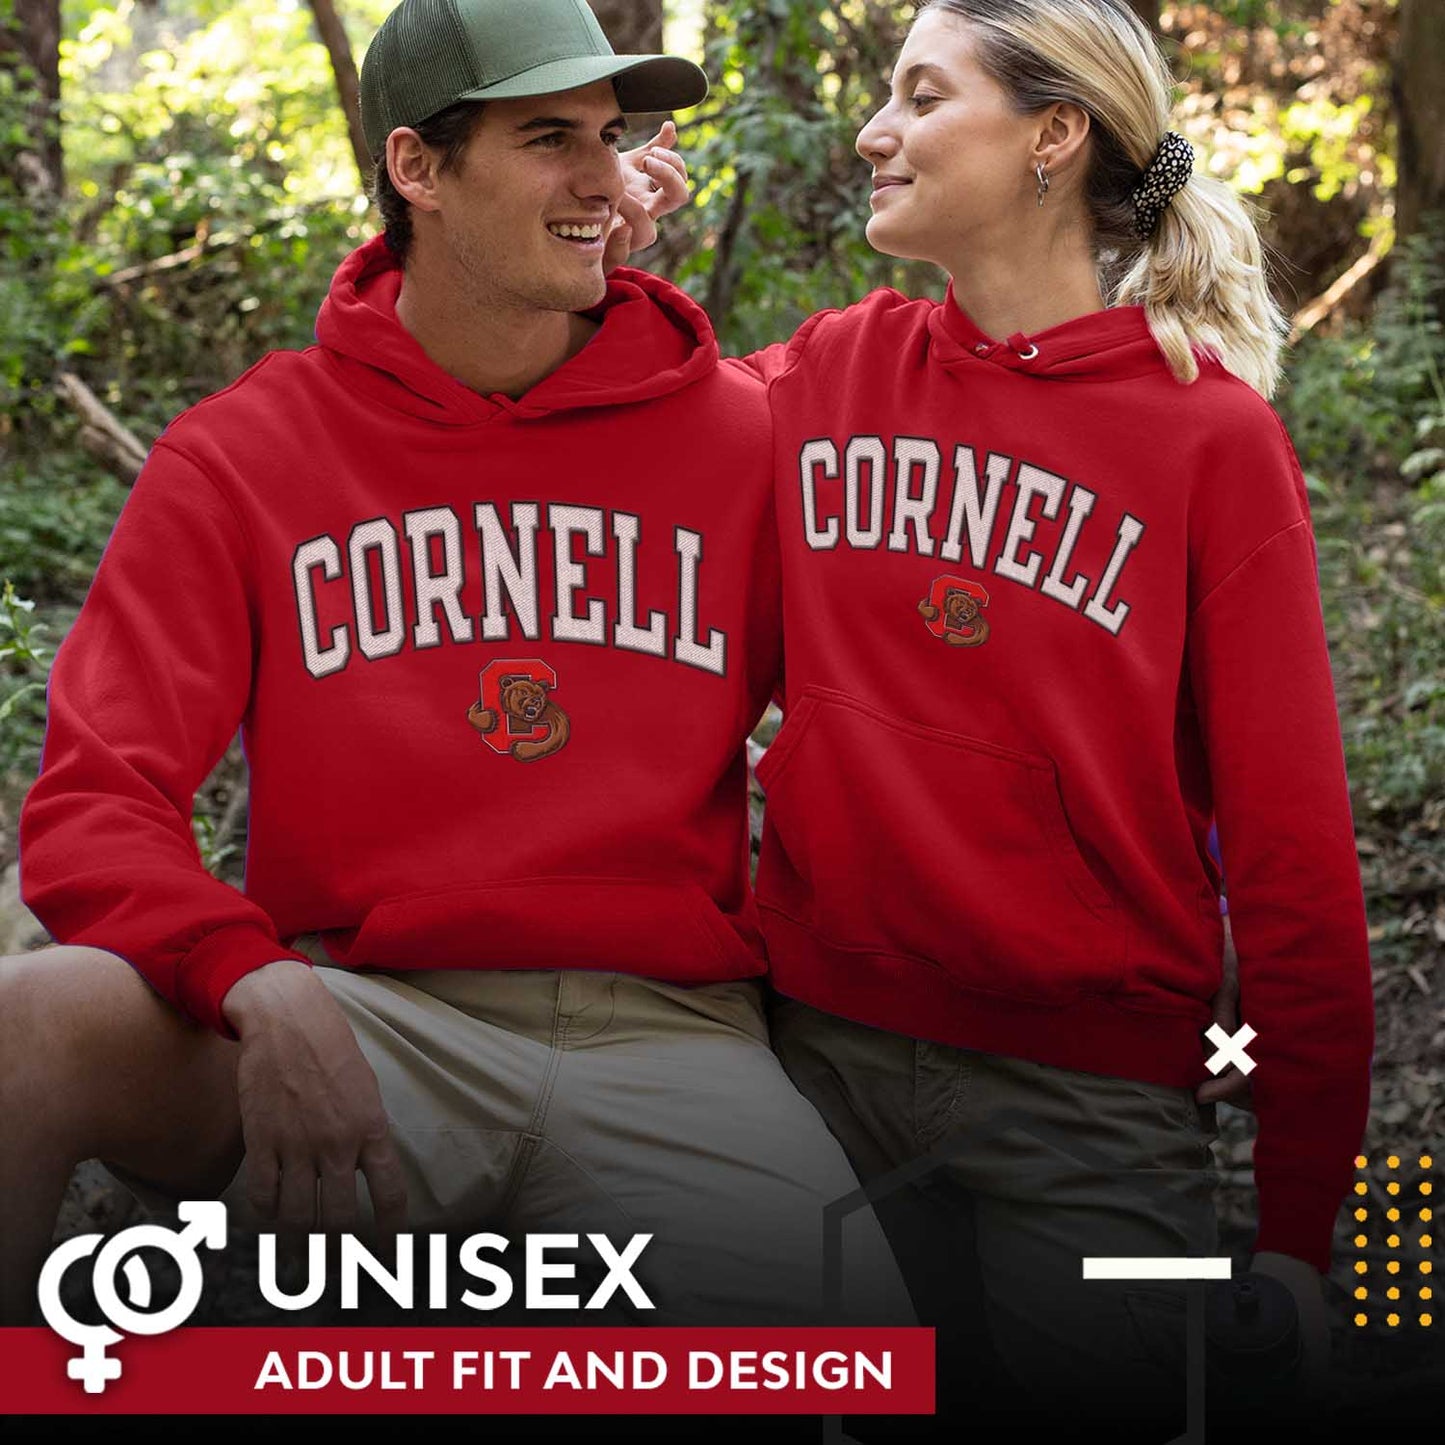 Cornell Big Red NCAA Adult Tackle Twill Hooded Sweatshirt - Red